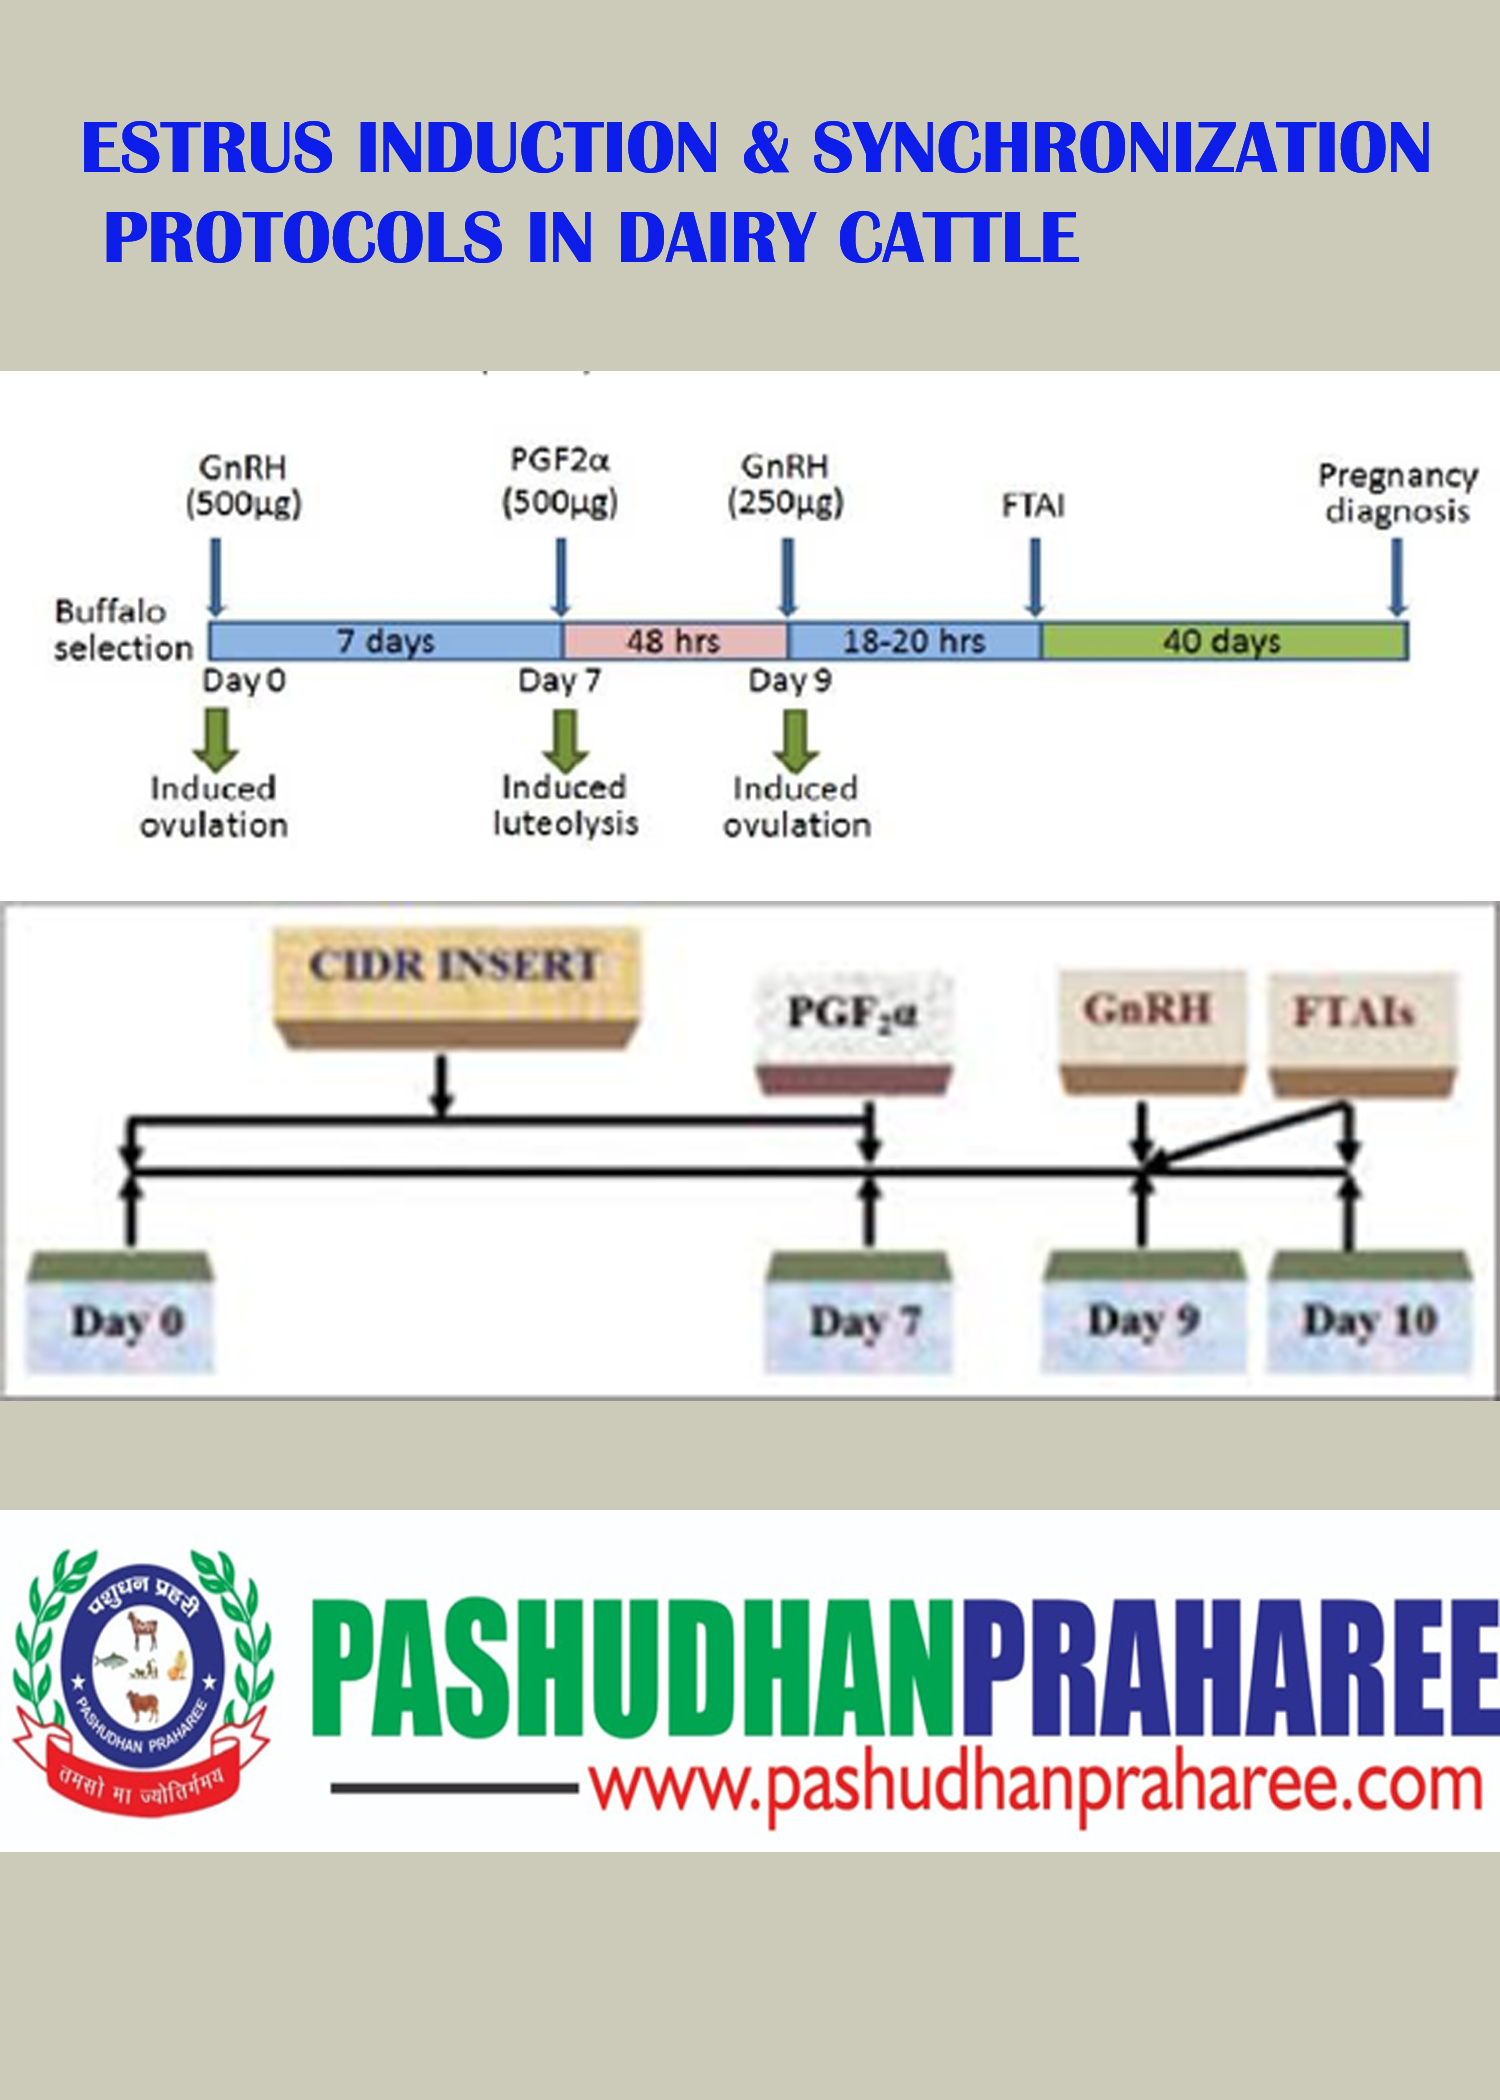 ESTRUS INDUCTION & SYNCHRONIZATION PROTOCOLS IN DAIRY CATTLE – Pashudhan  praharee